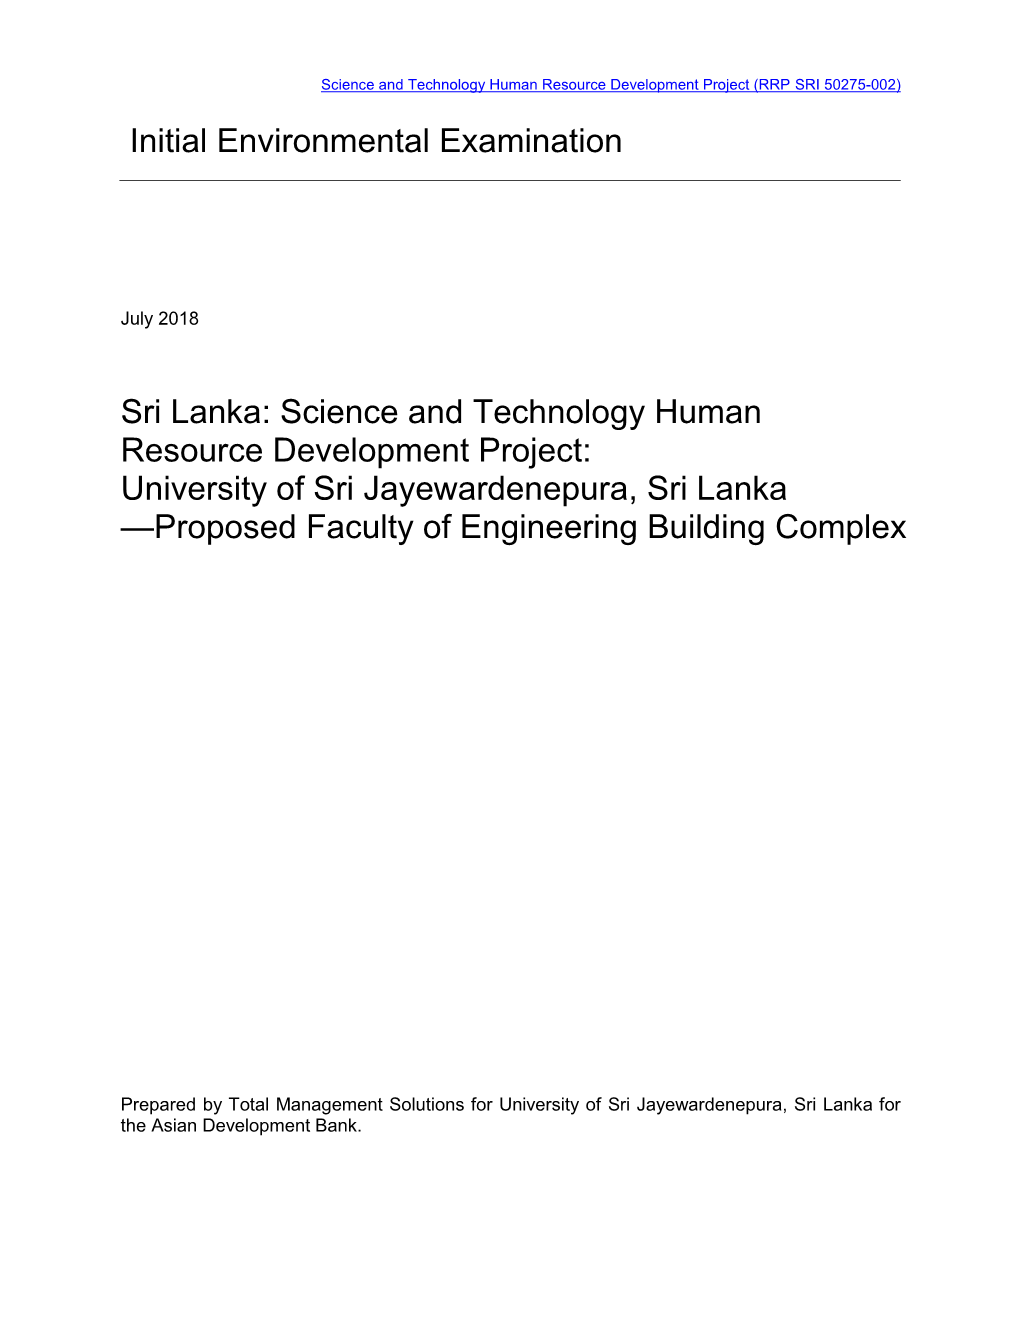 University of Sri Jayewardenepura, Sri Lanka —Proposed Faculty of Engineering Building Complex